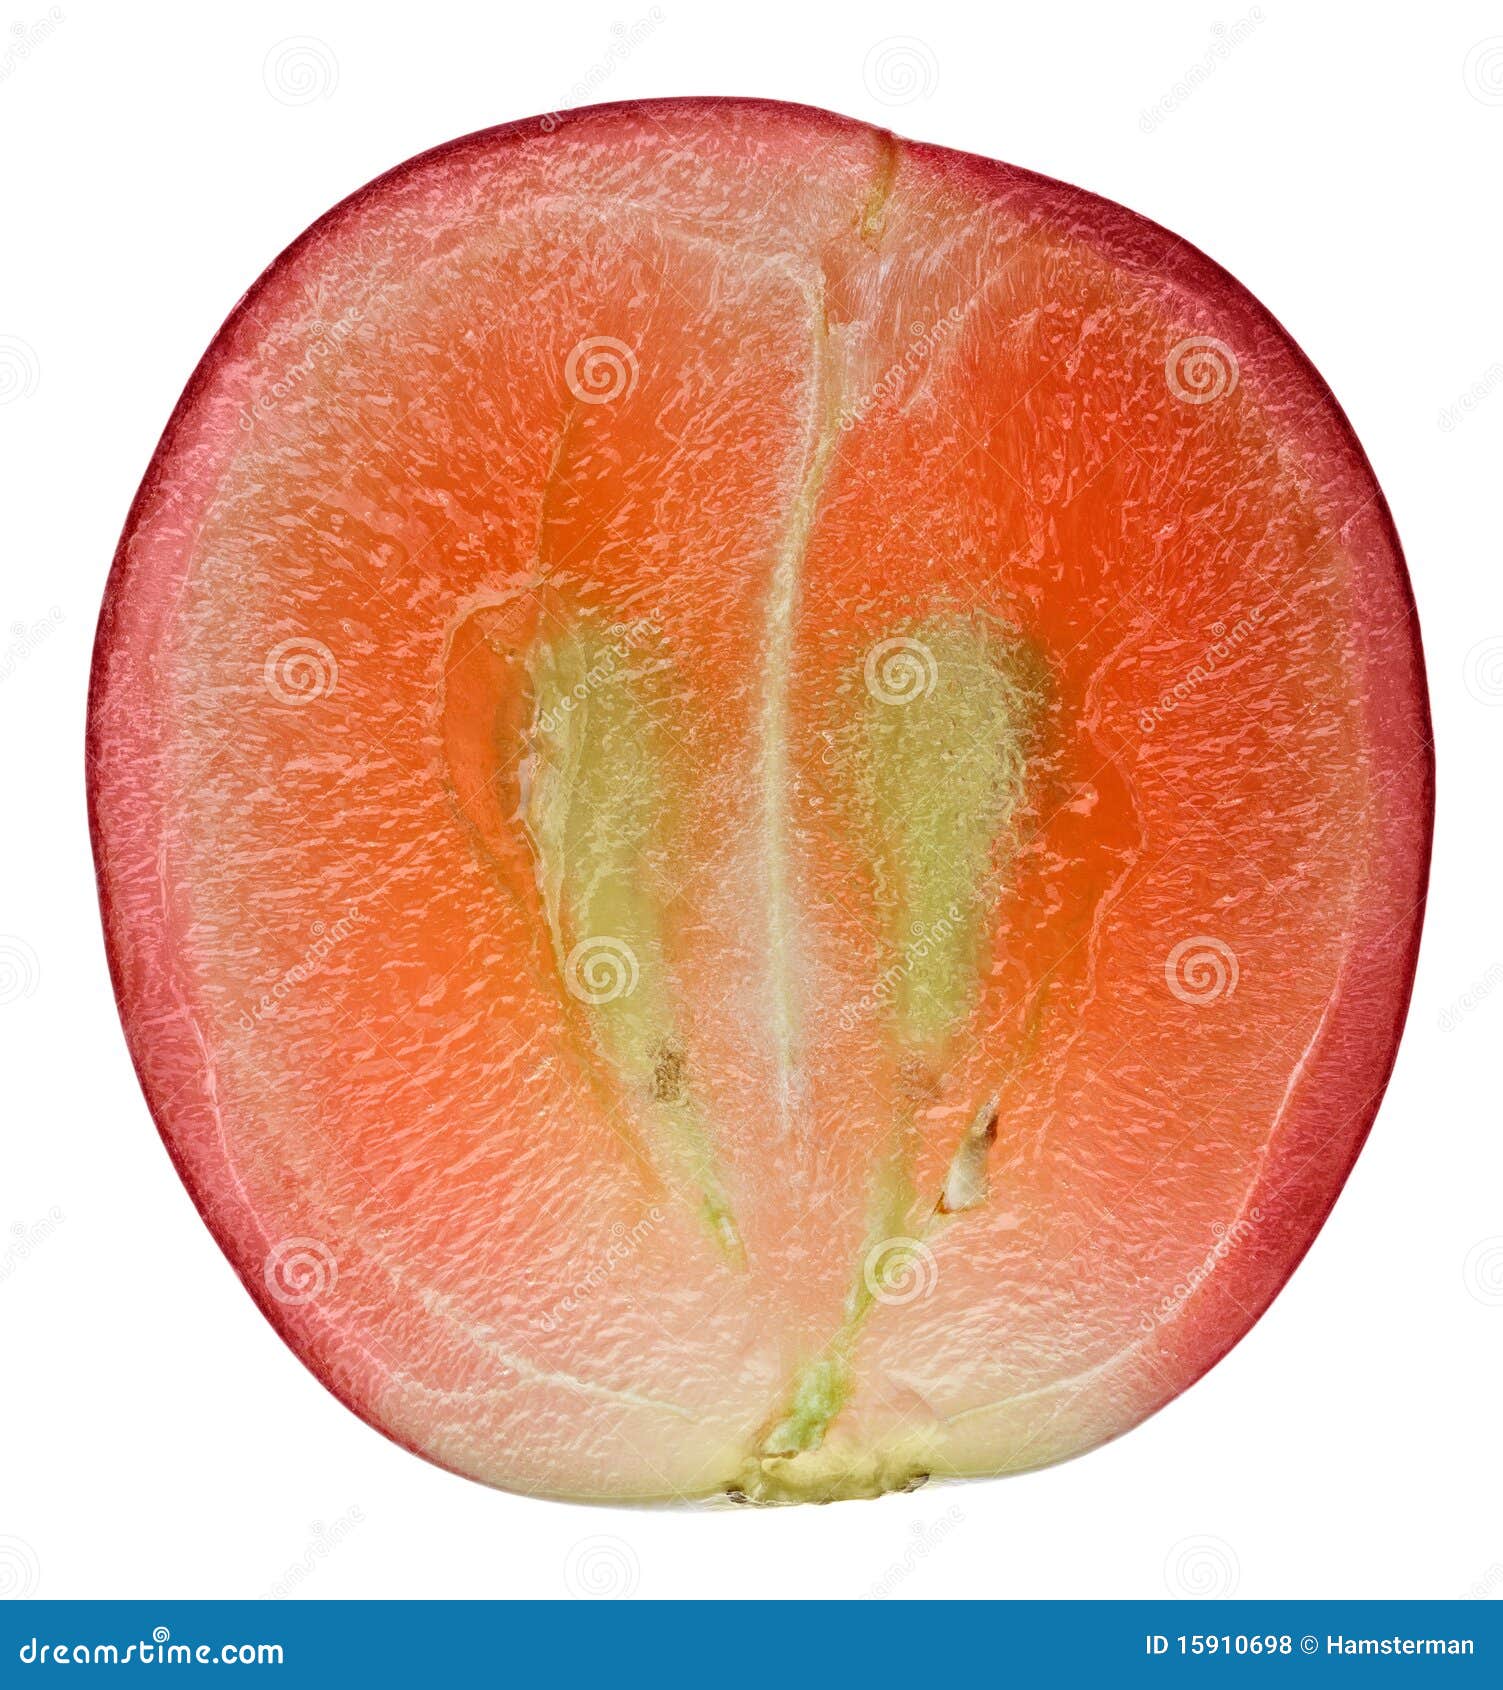 translucent slice of red grape fruit